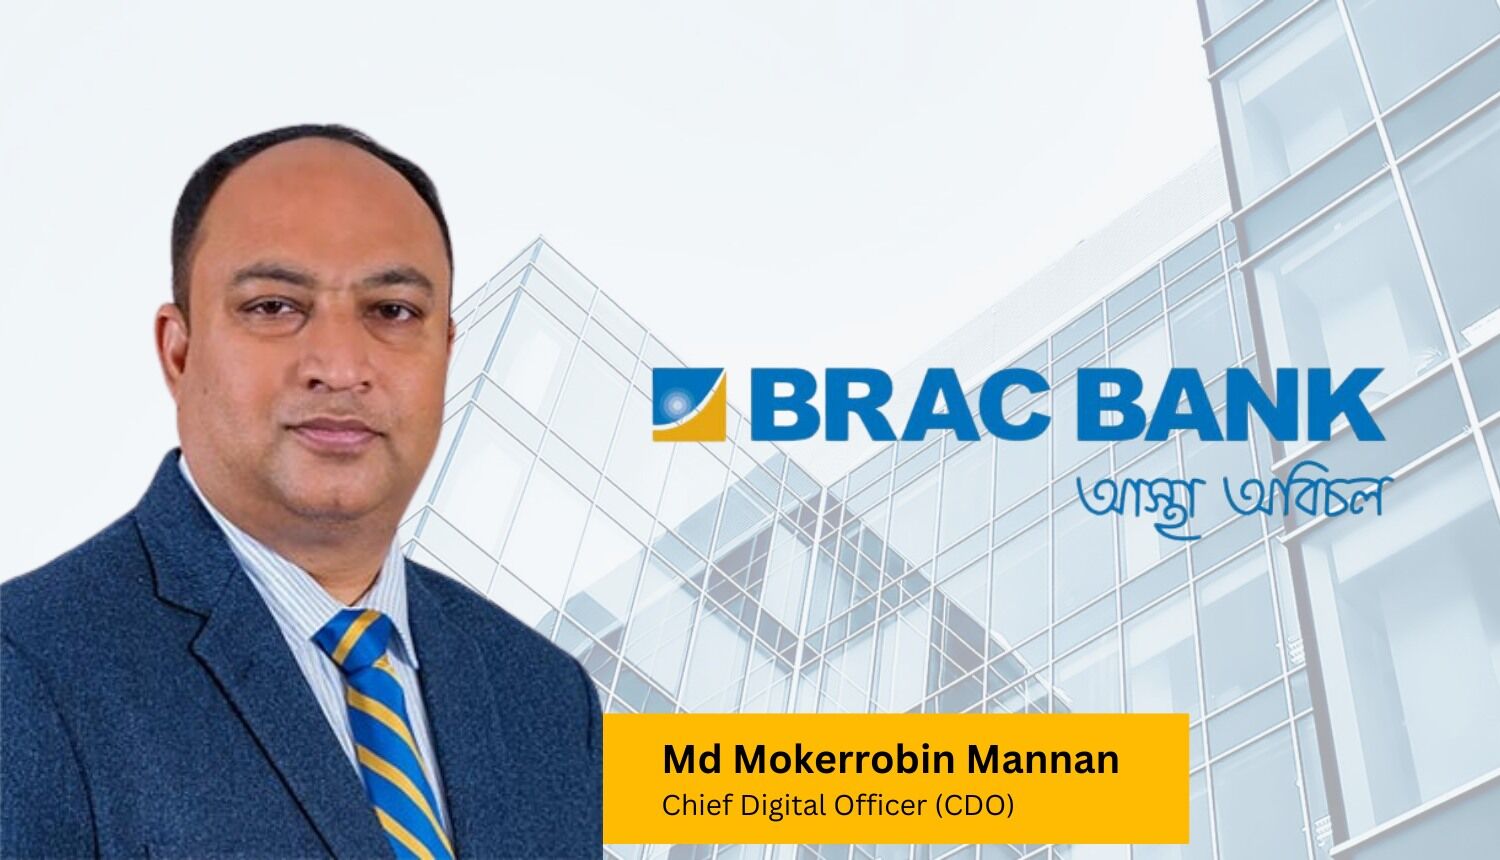 Brac Bank Appoints Md Mokerrobin Mannan as the first Chief Digital Officer